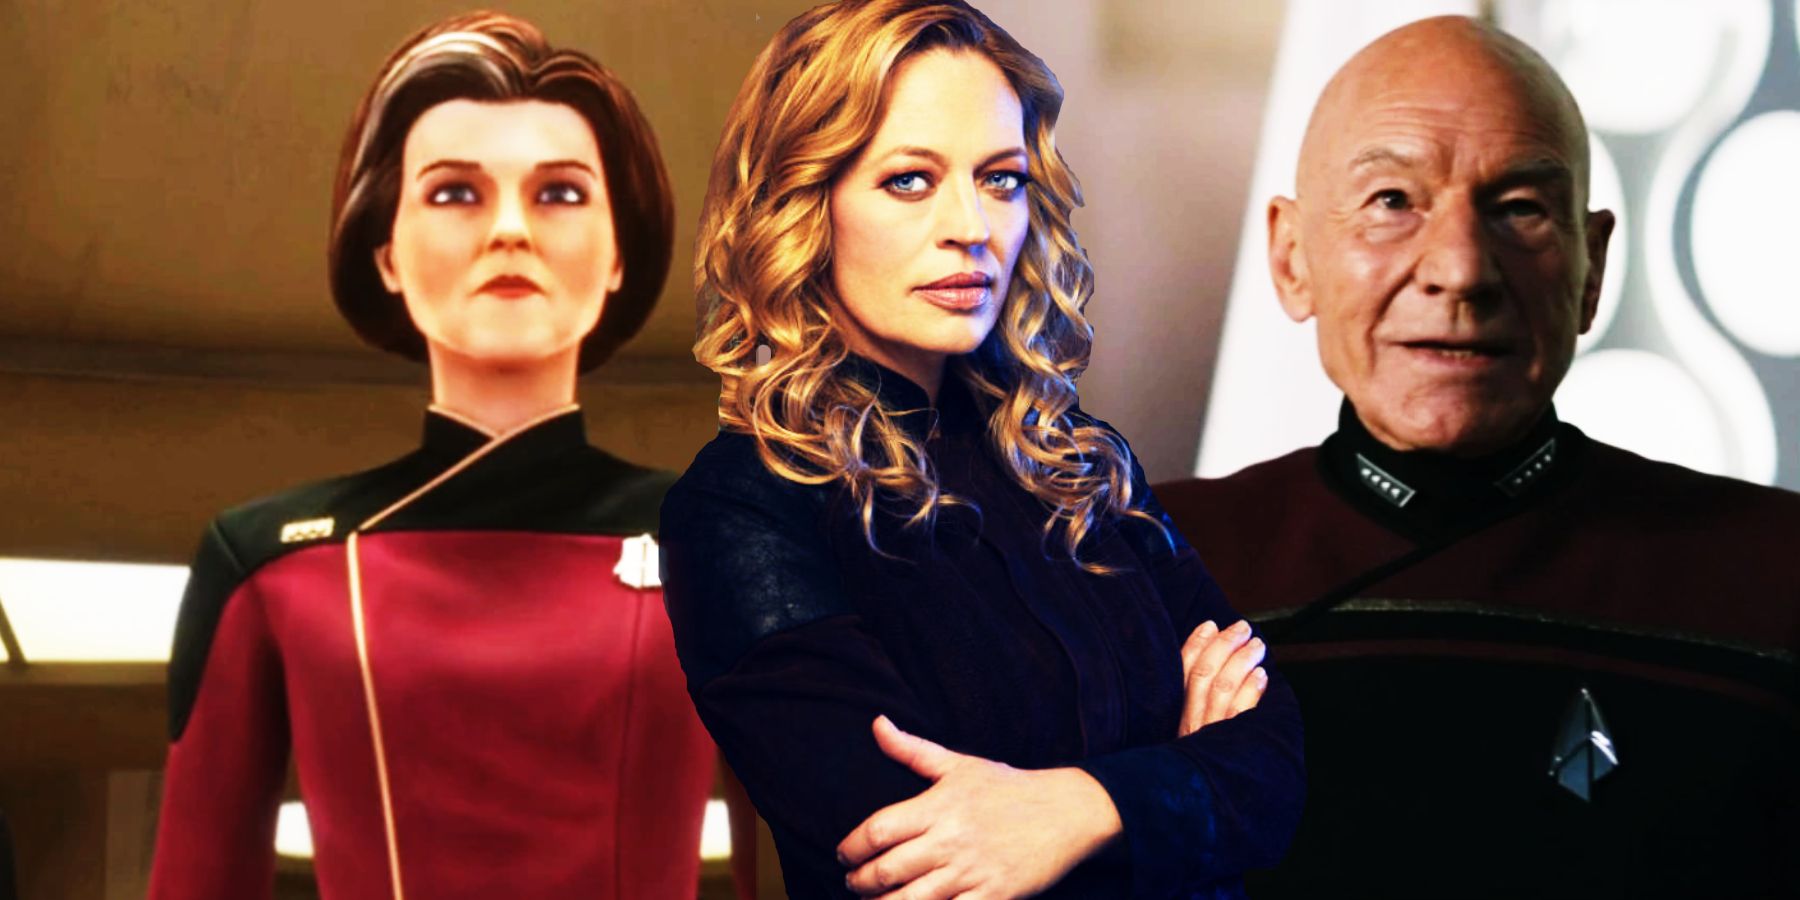 Kate Mulgrew as Admiral Janeway, Jeri Ryan as Seven of Nine and Patrick Stewart as Admiral Picard